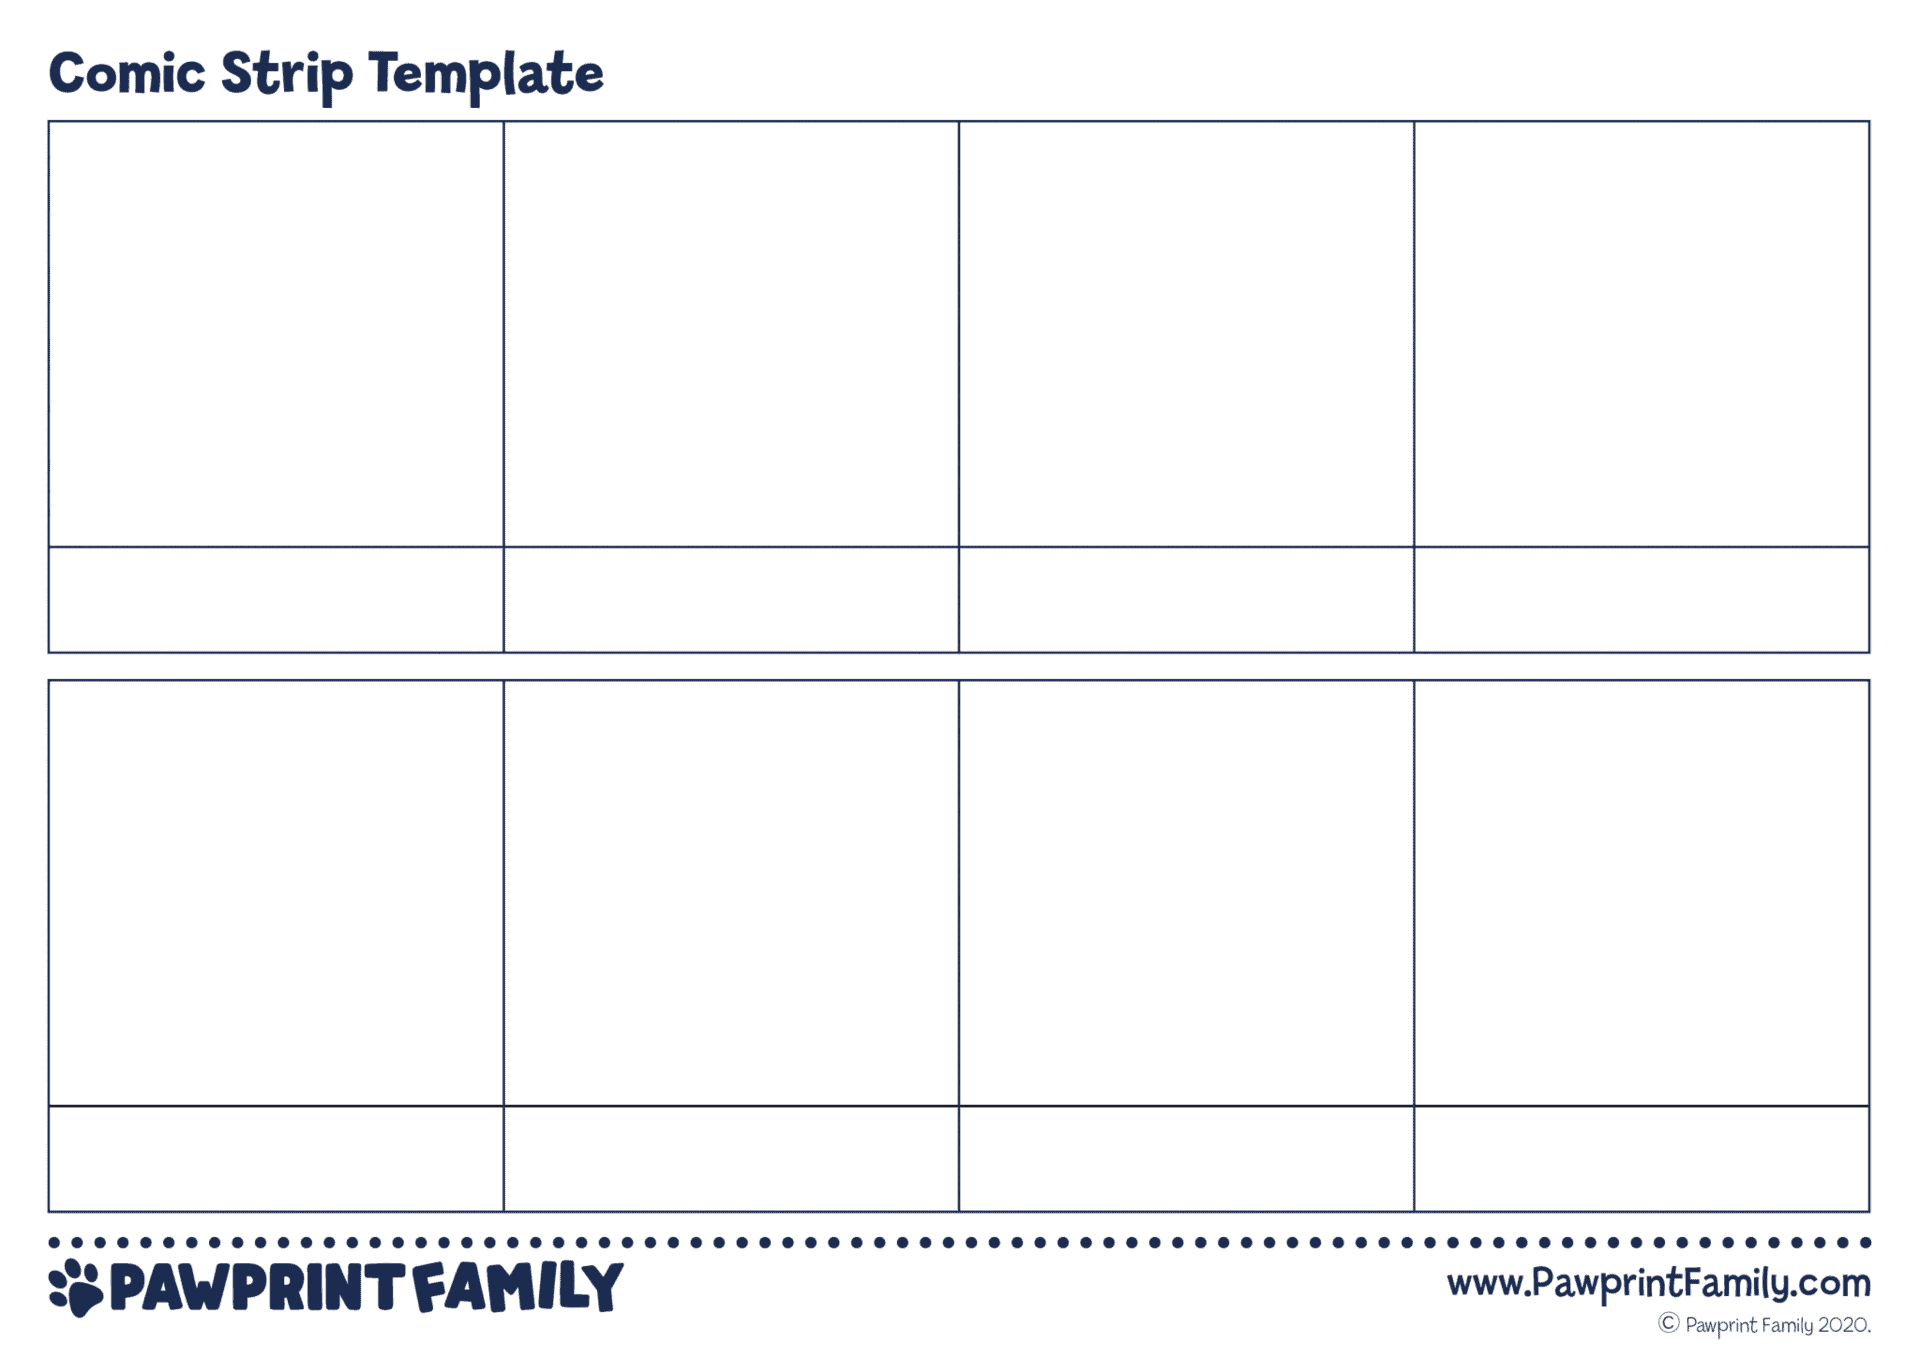 comic-strip-template-pawprint-family